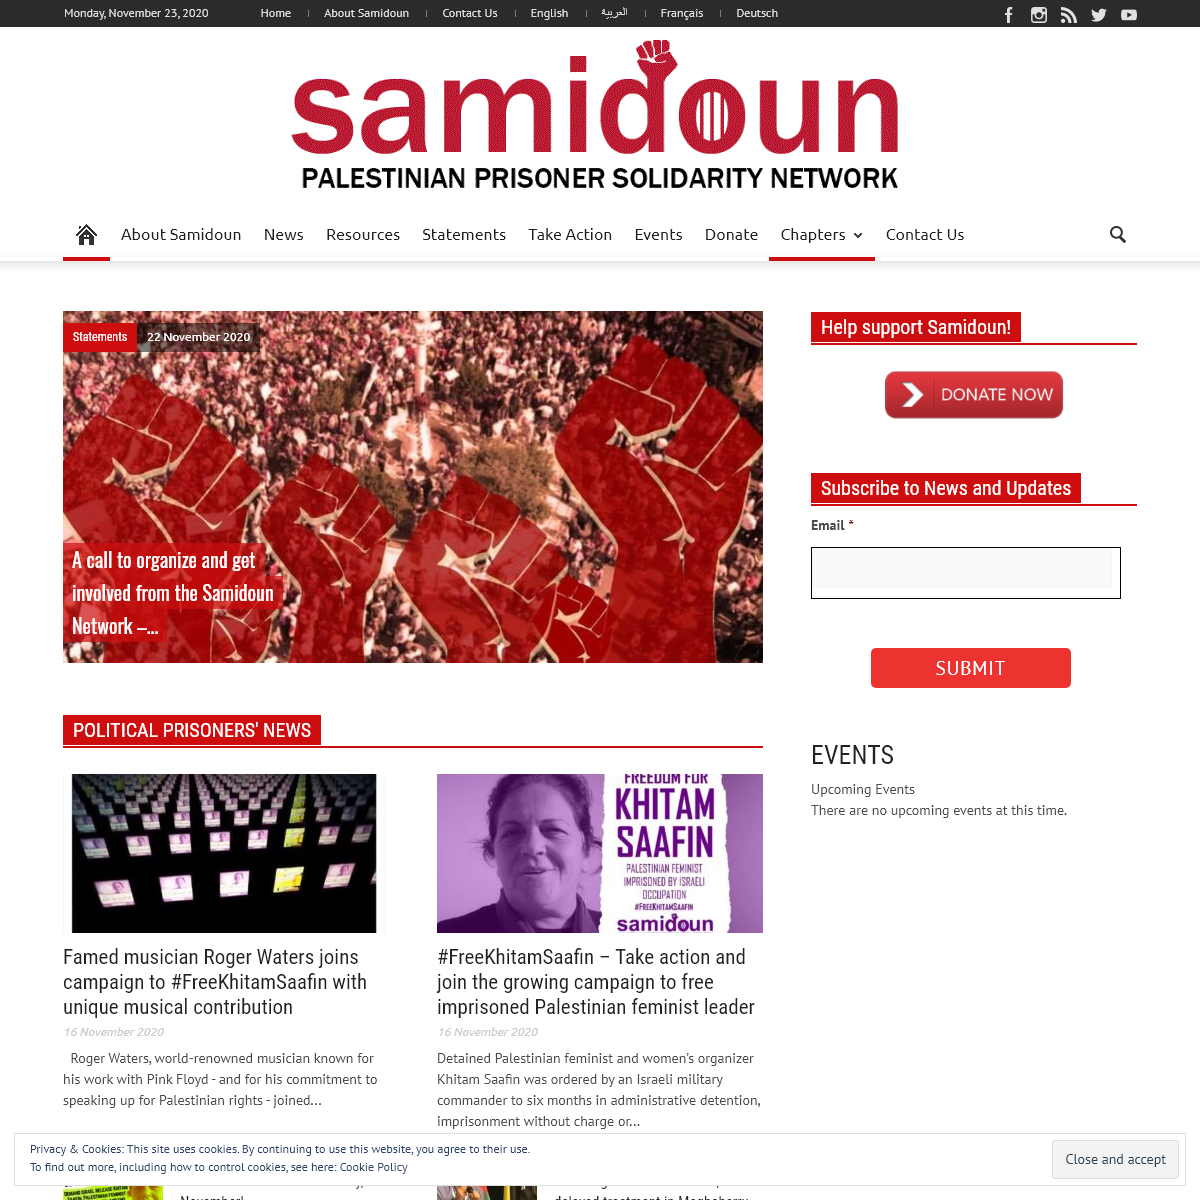 A complete backup of samidoun.net